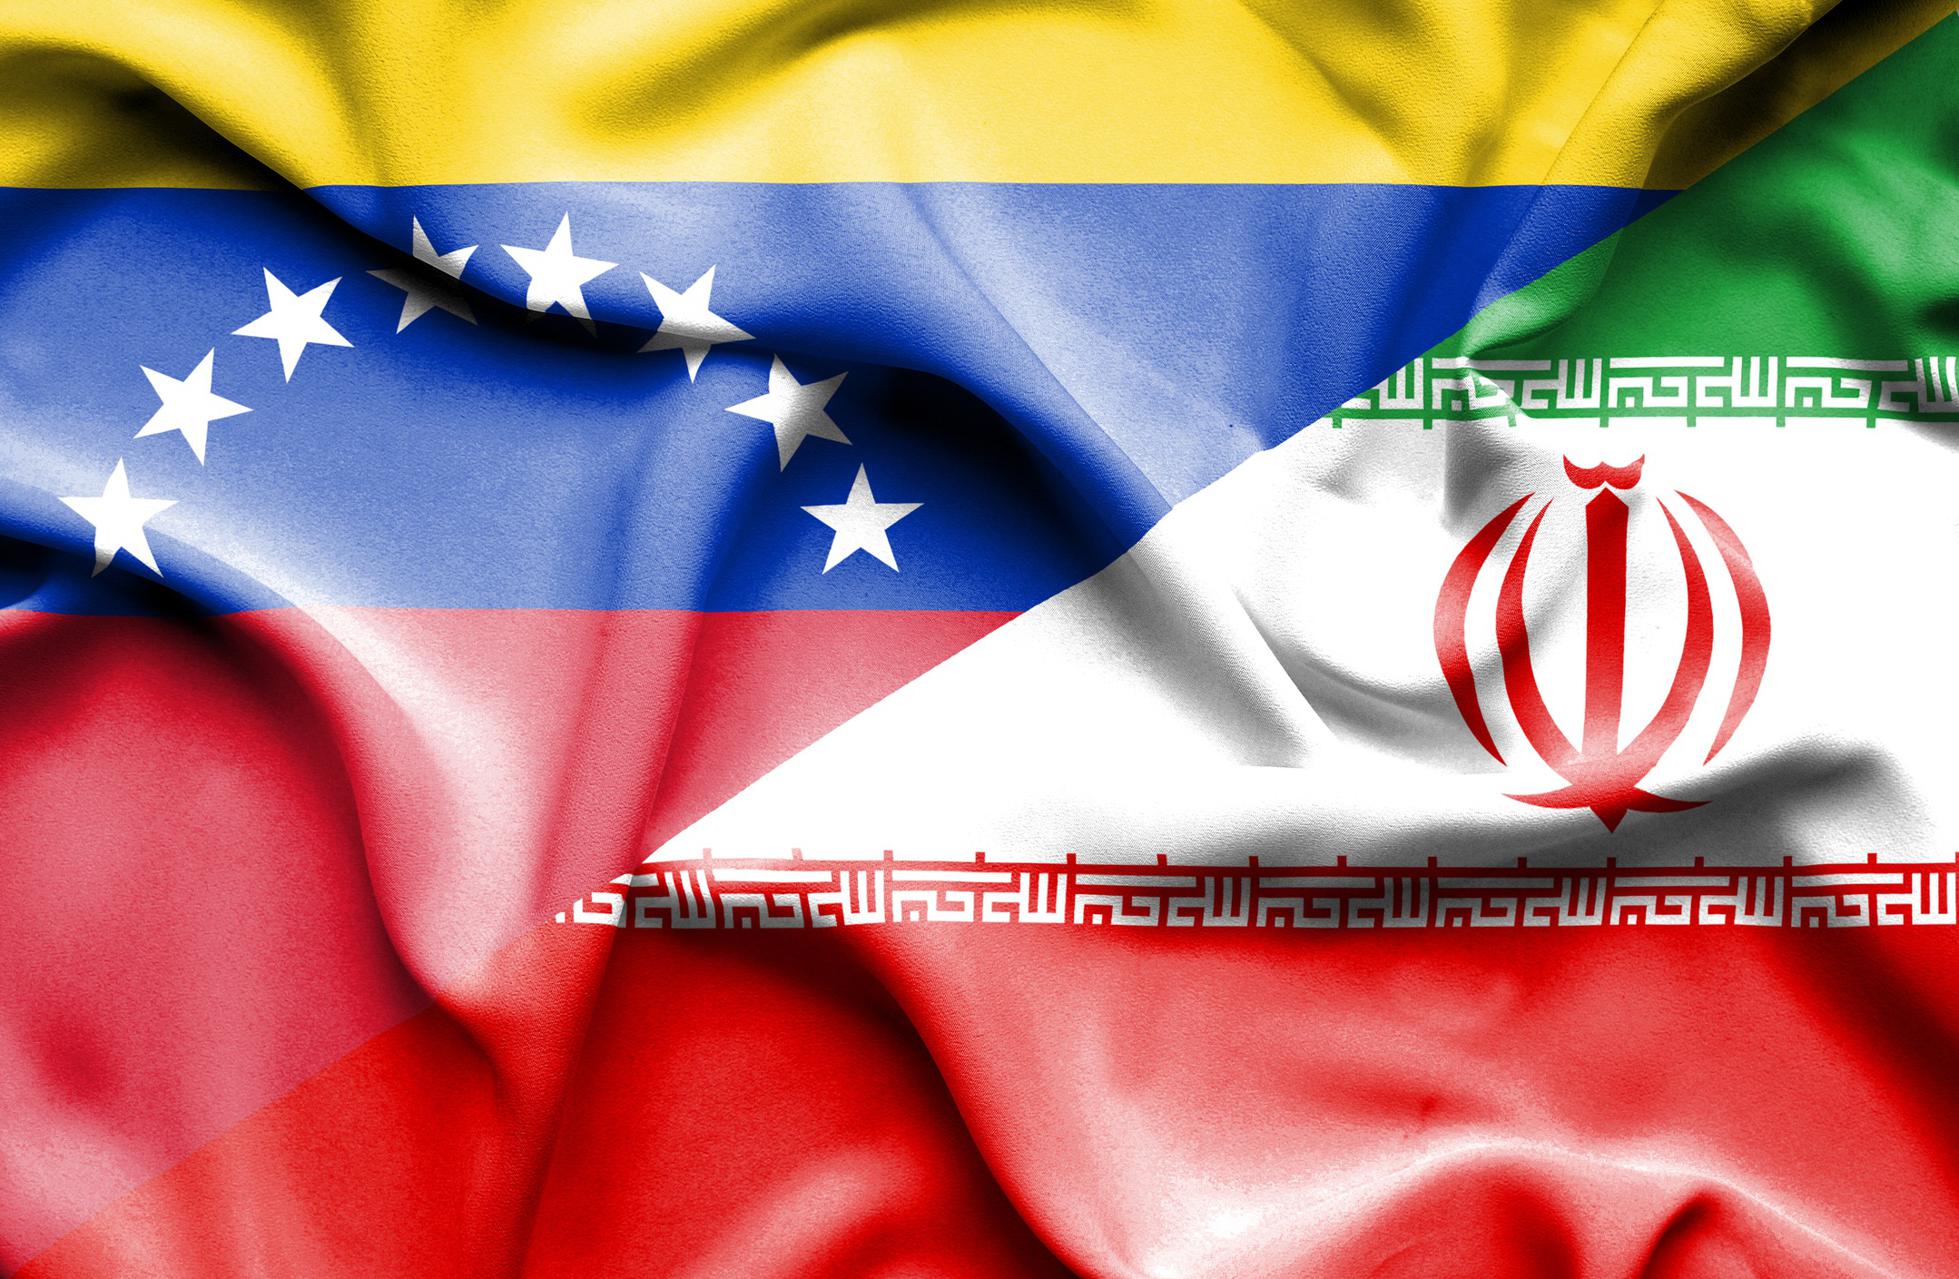 Waving flag of Iran and Venezuela